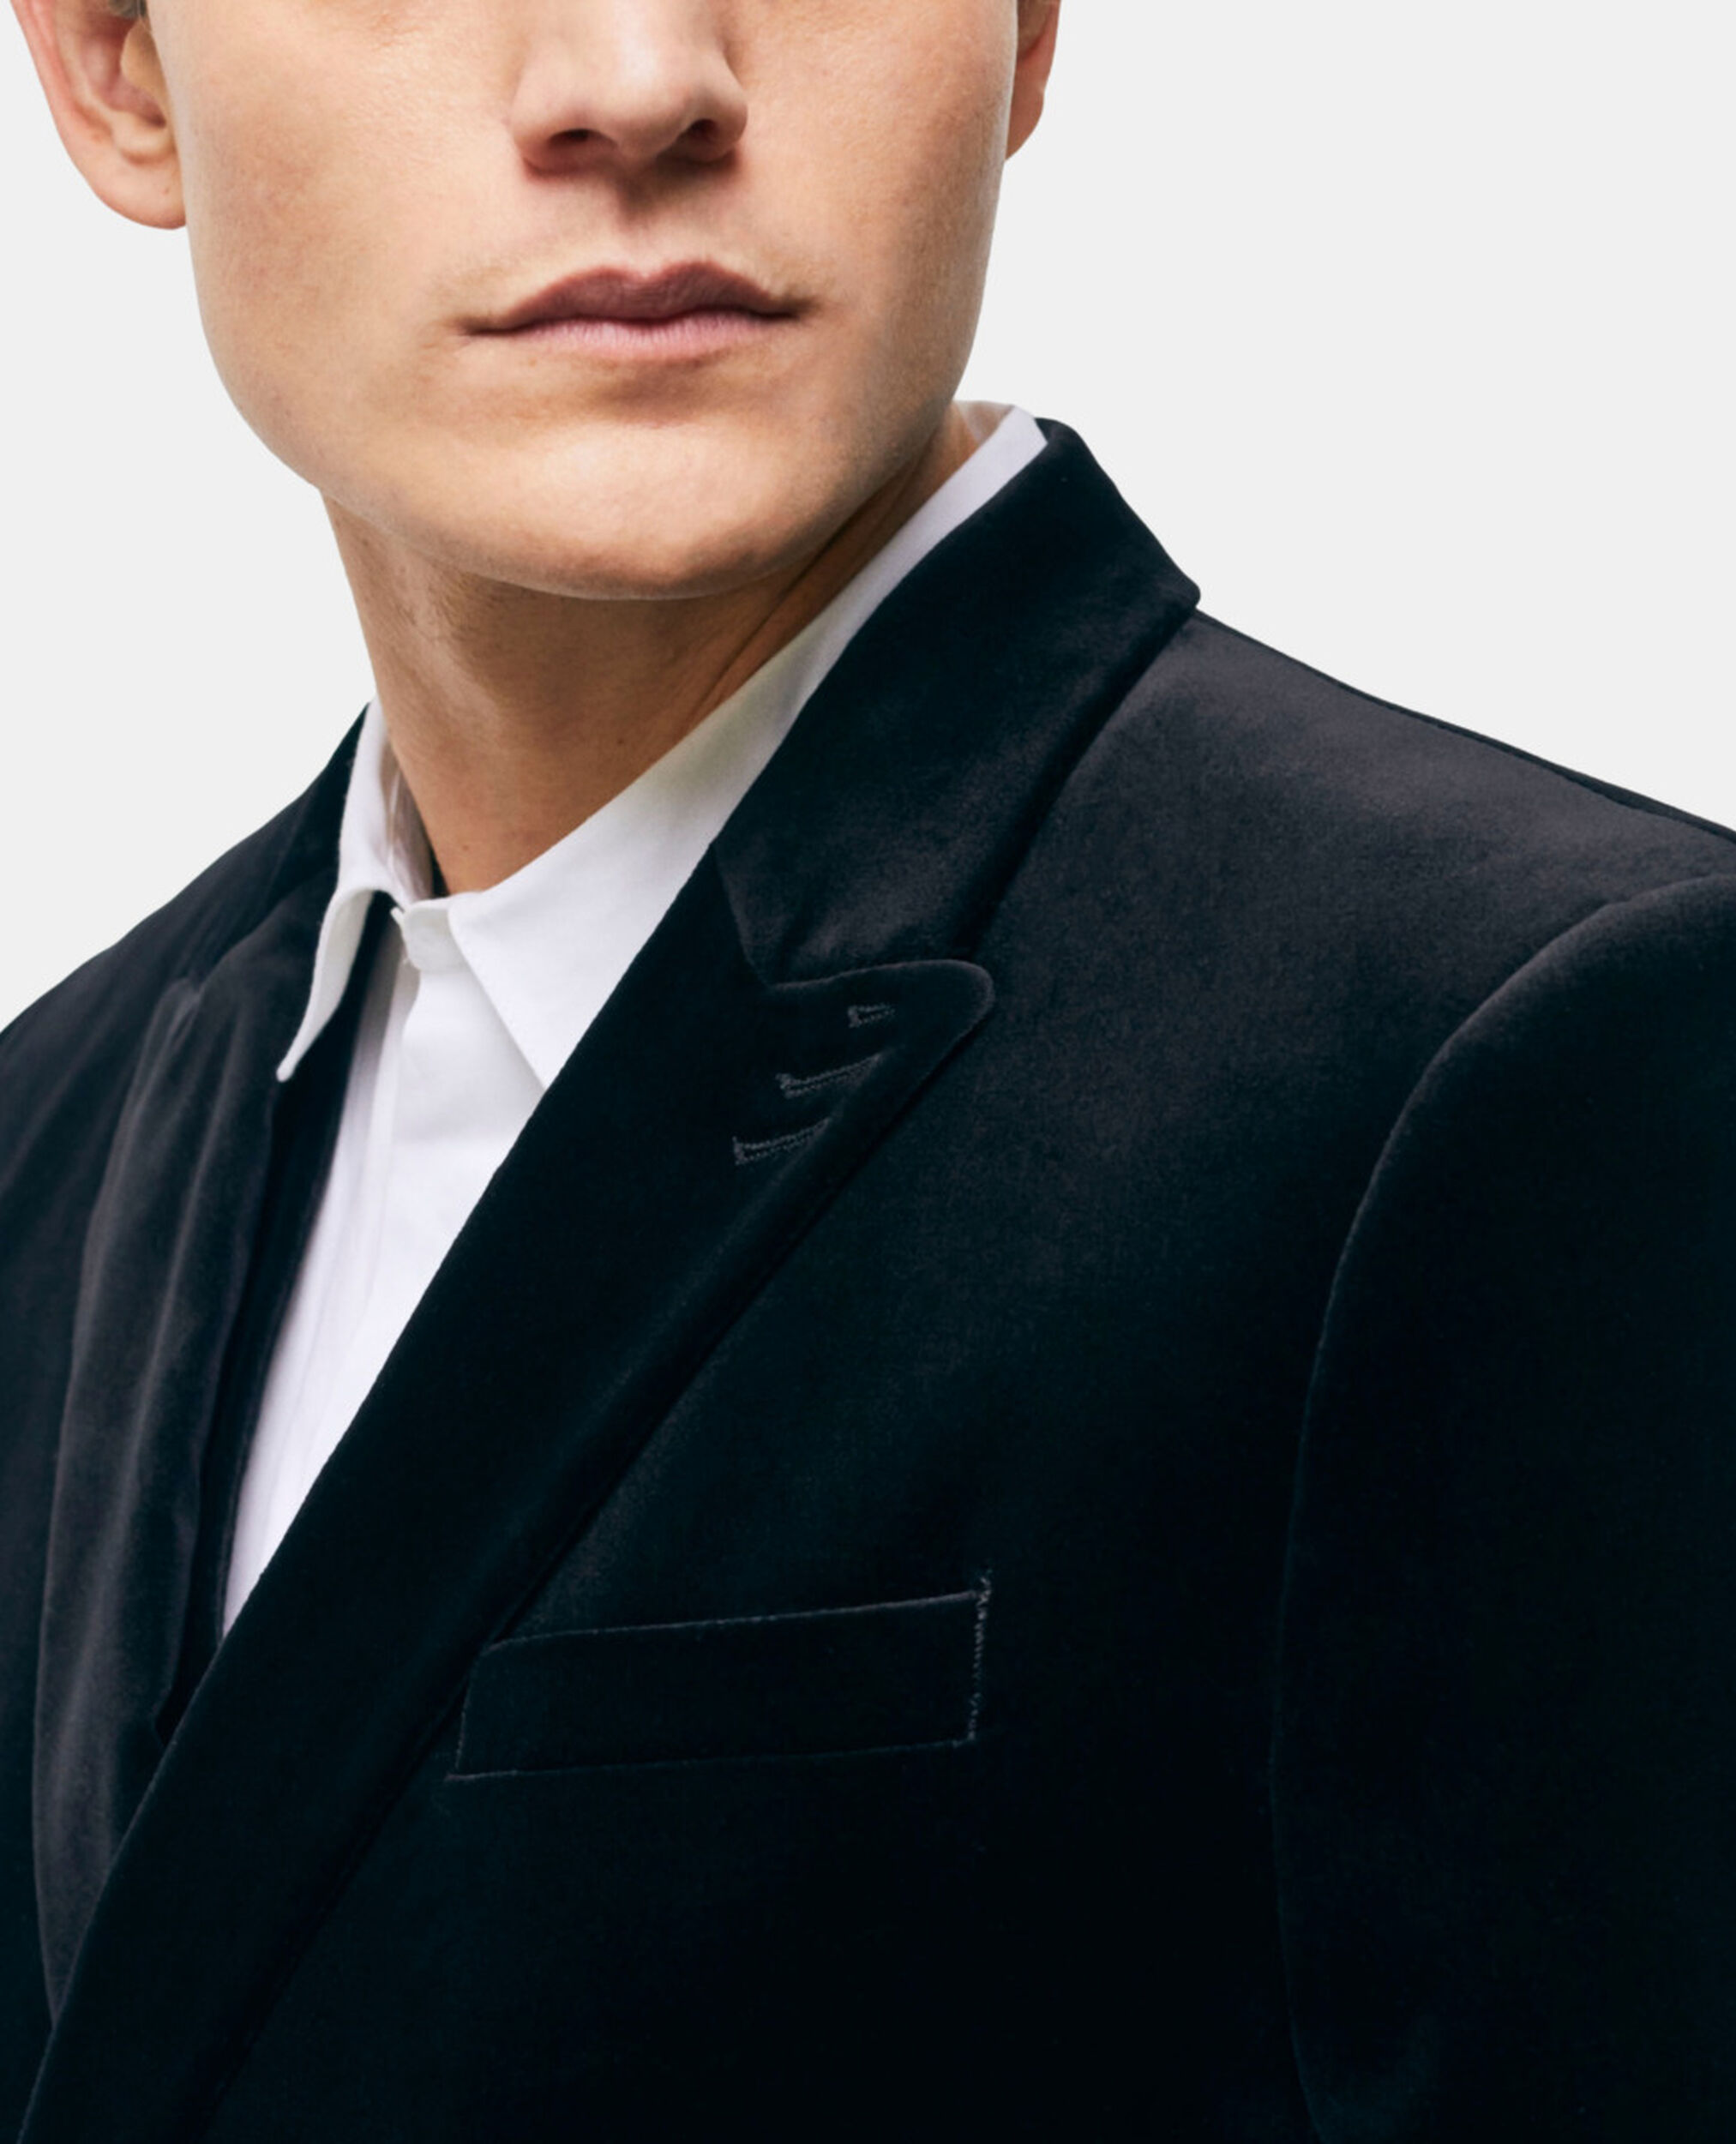 Black velvet double-breasted suit jacket, BLACK, hi-res image number null